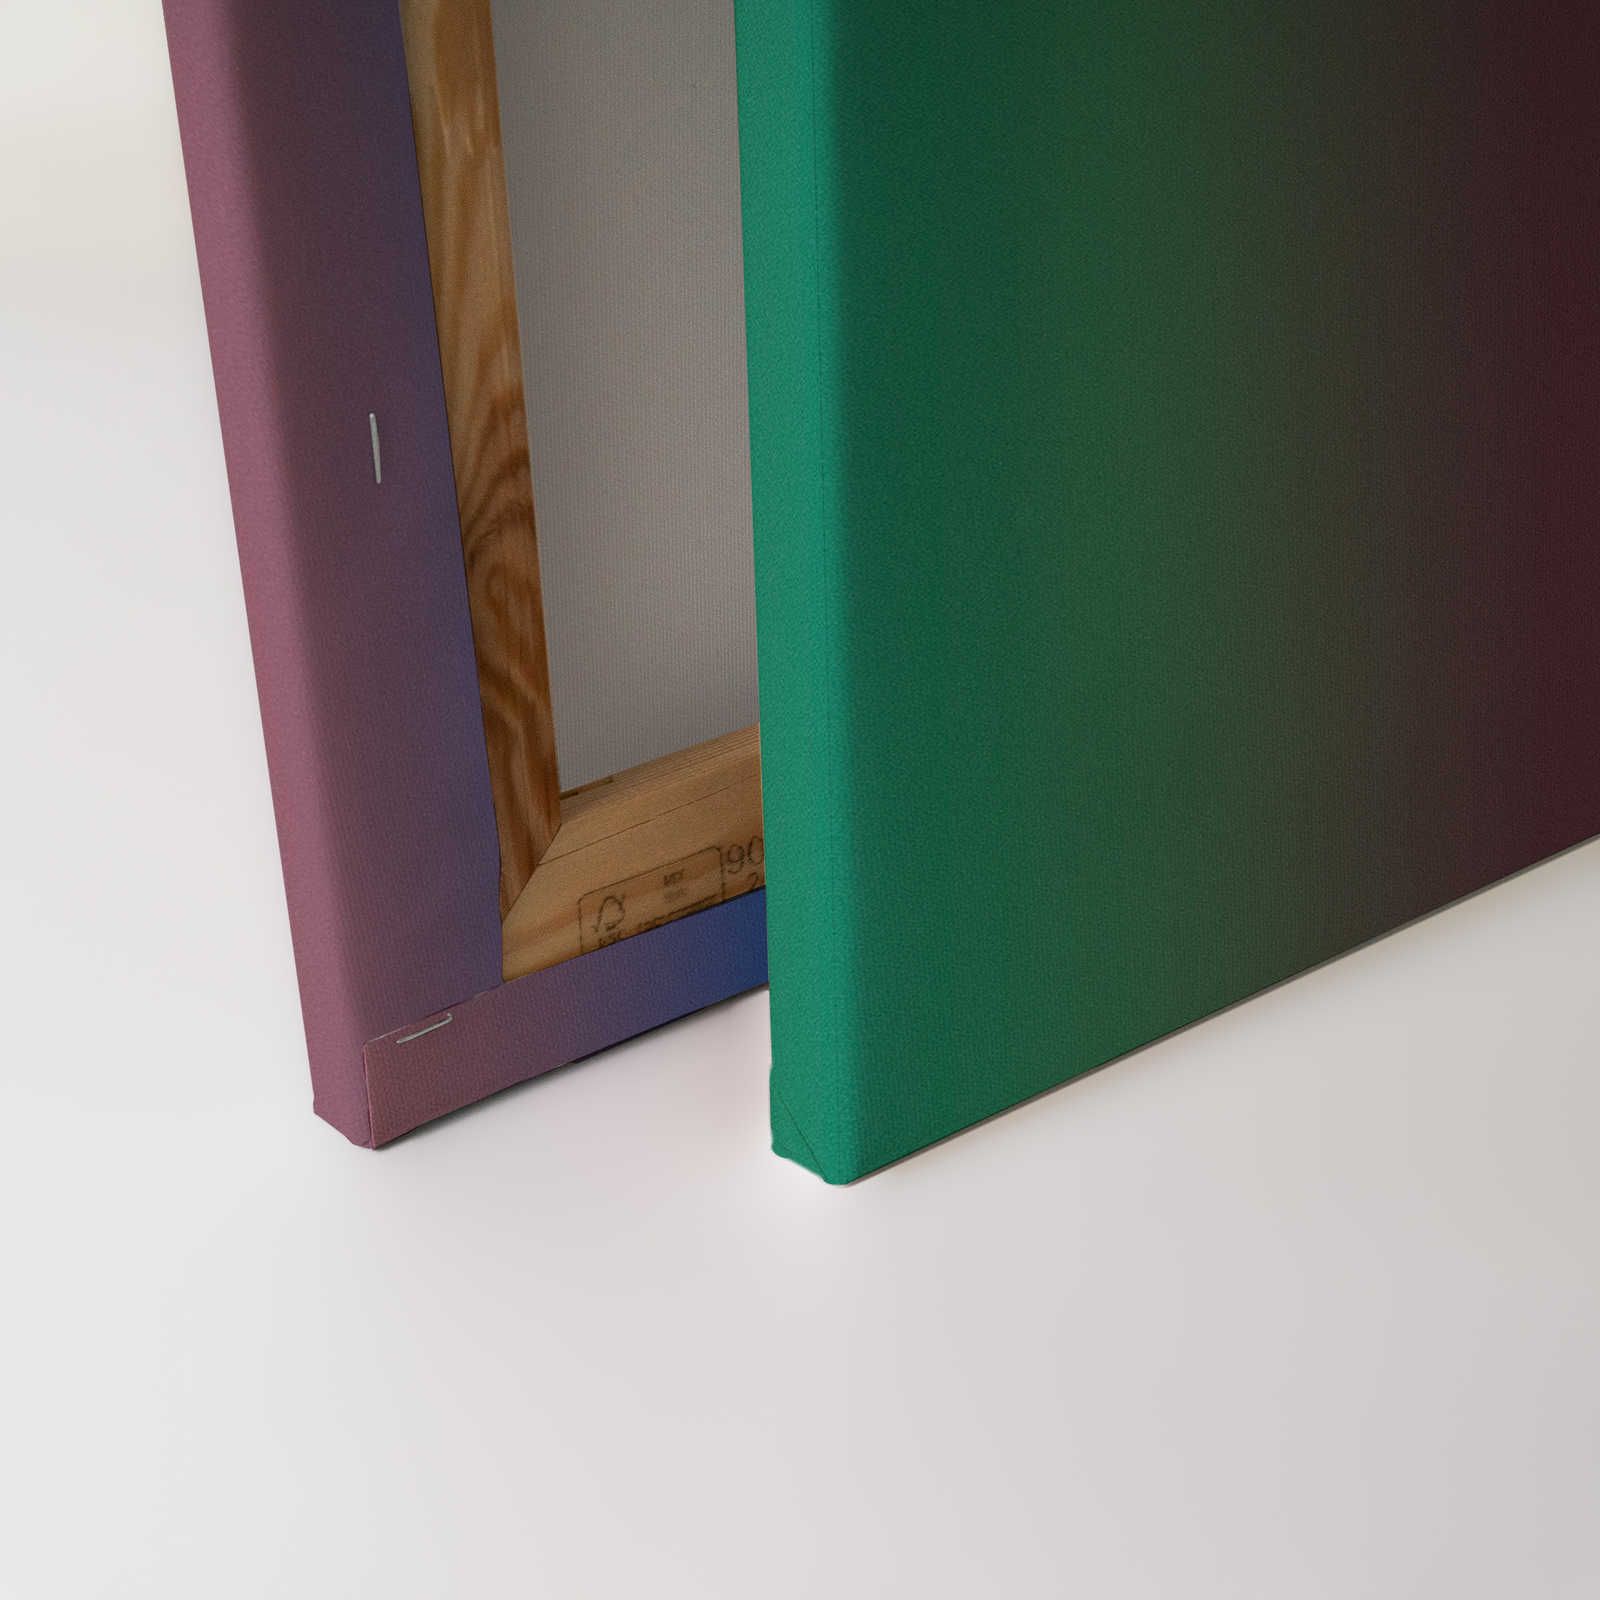             Over the Rainbow 2 - Lienzo degradado Diseño de rayas de colores - 1,20 m x 0,80 m
        